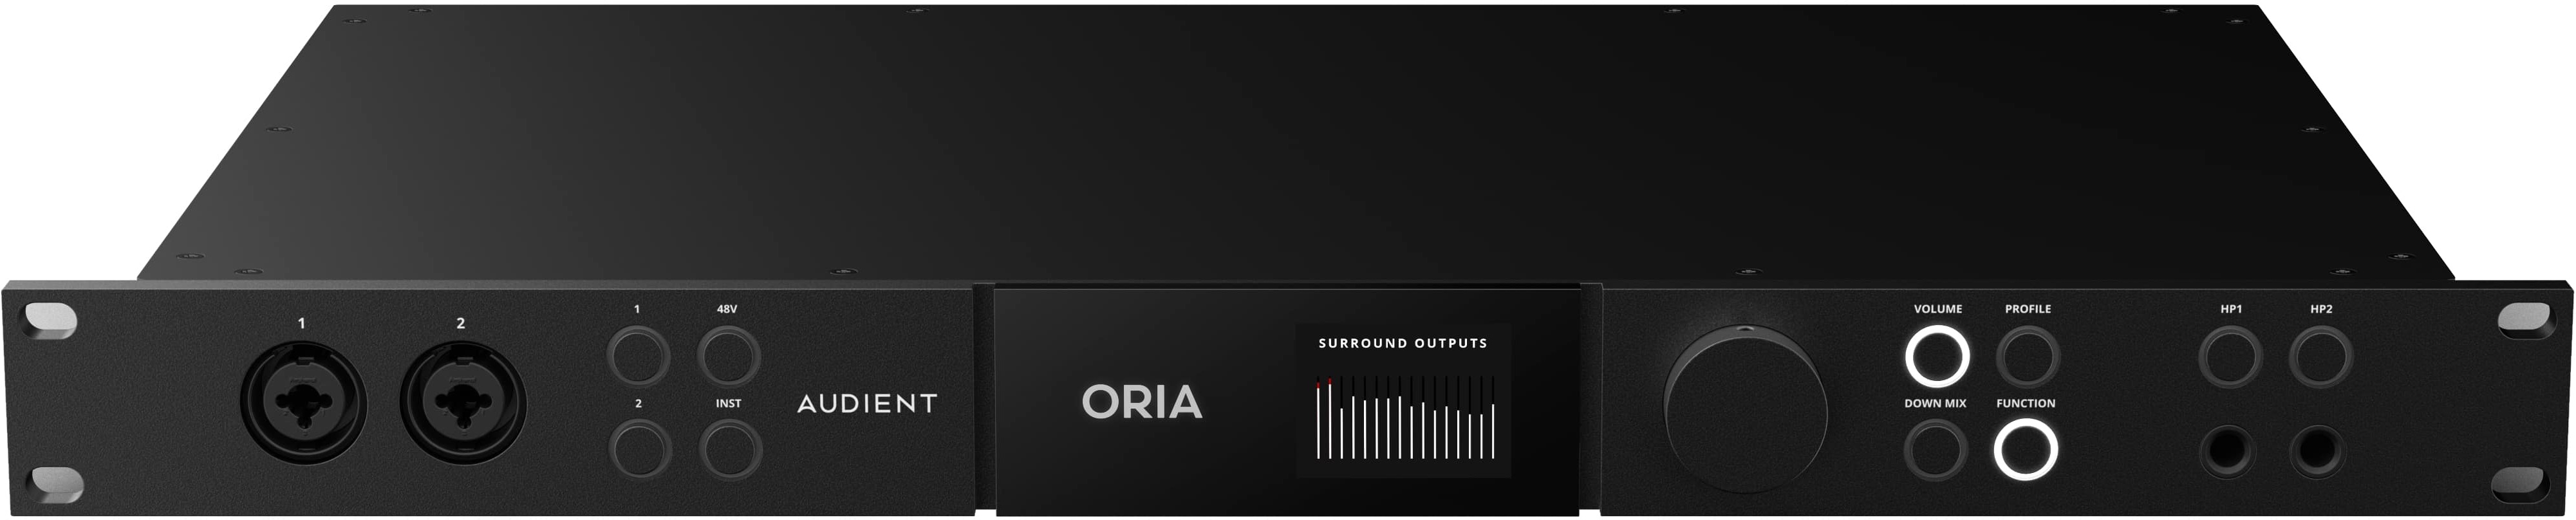 Audient Oria - USB audio interface - Main picture